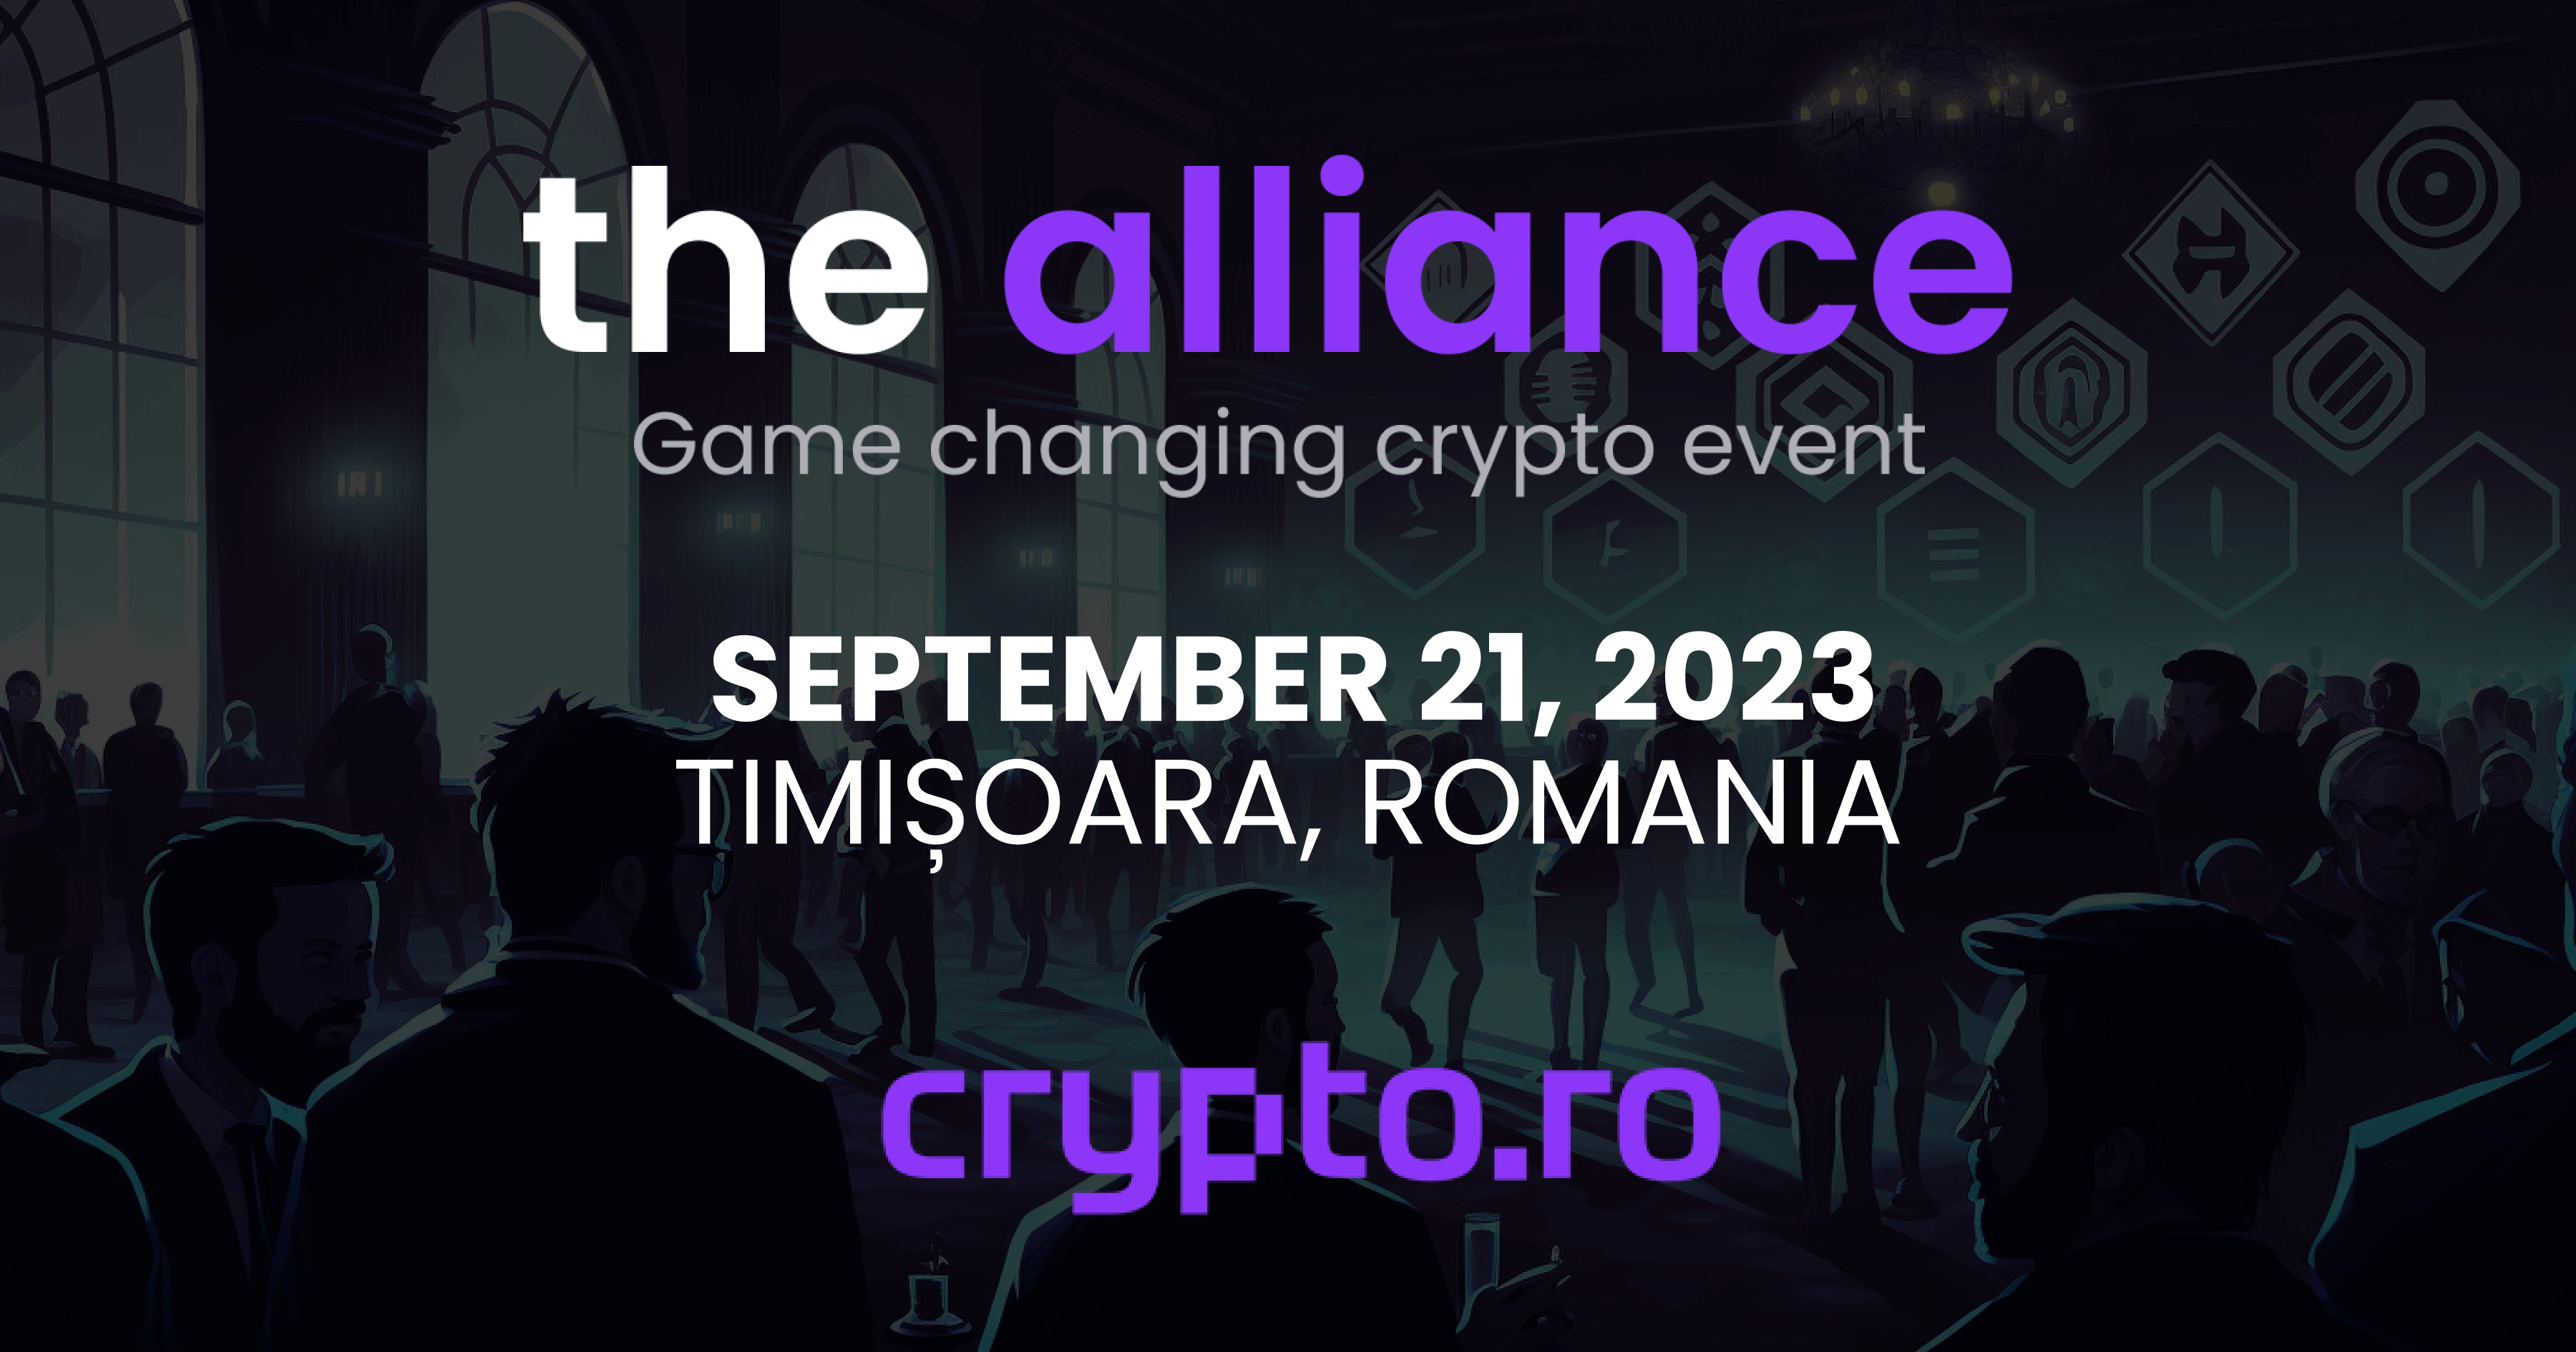 crypto event the alliance crypto.ro